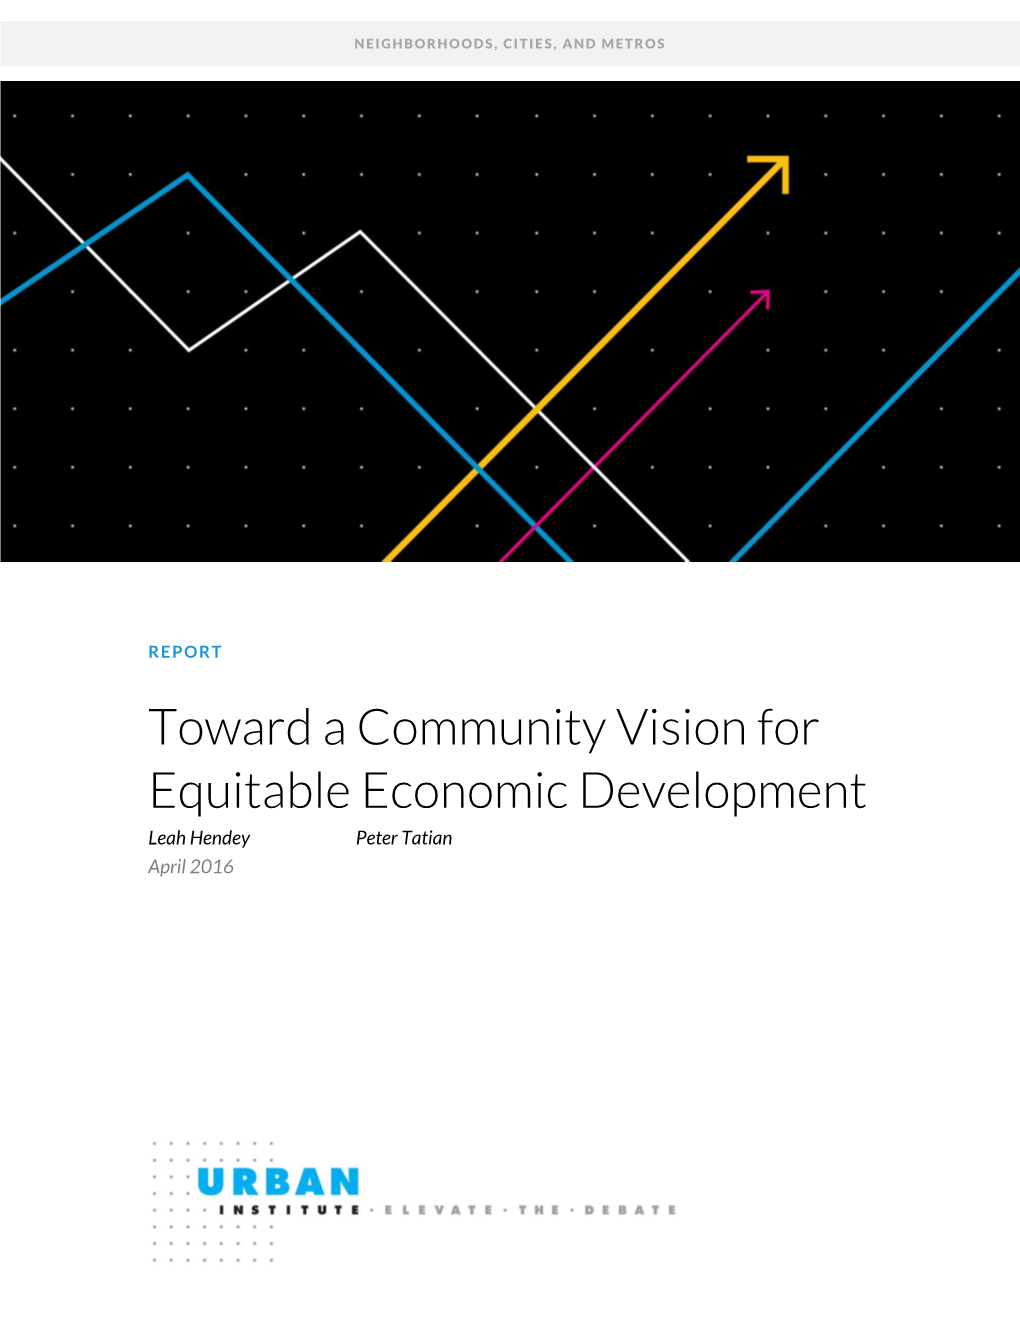 Toward a Community Vision for Equitable Economic Development